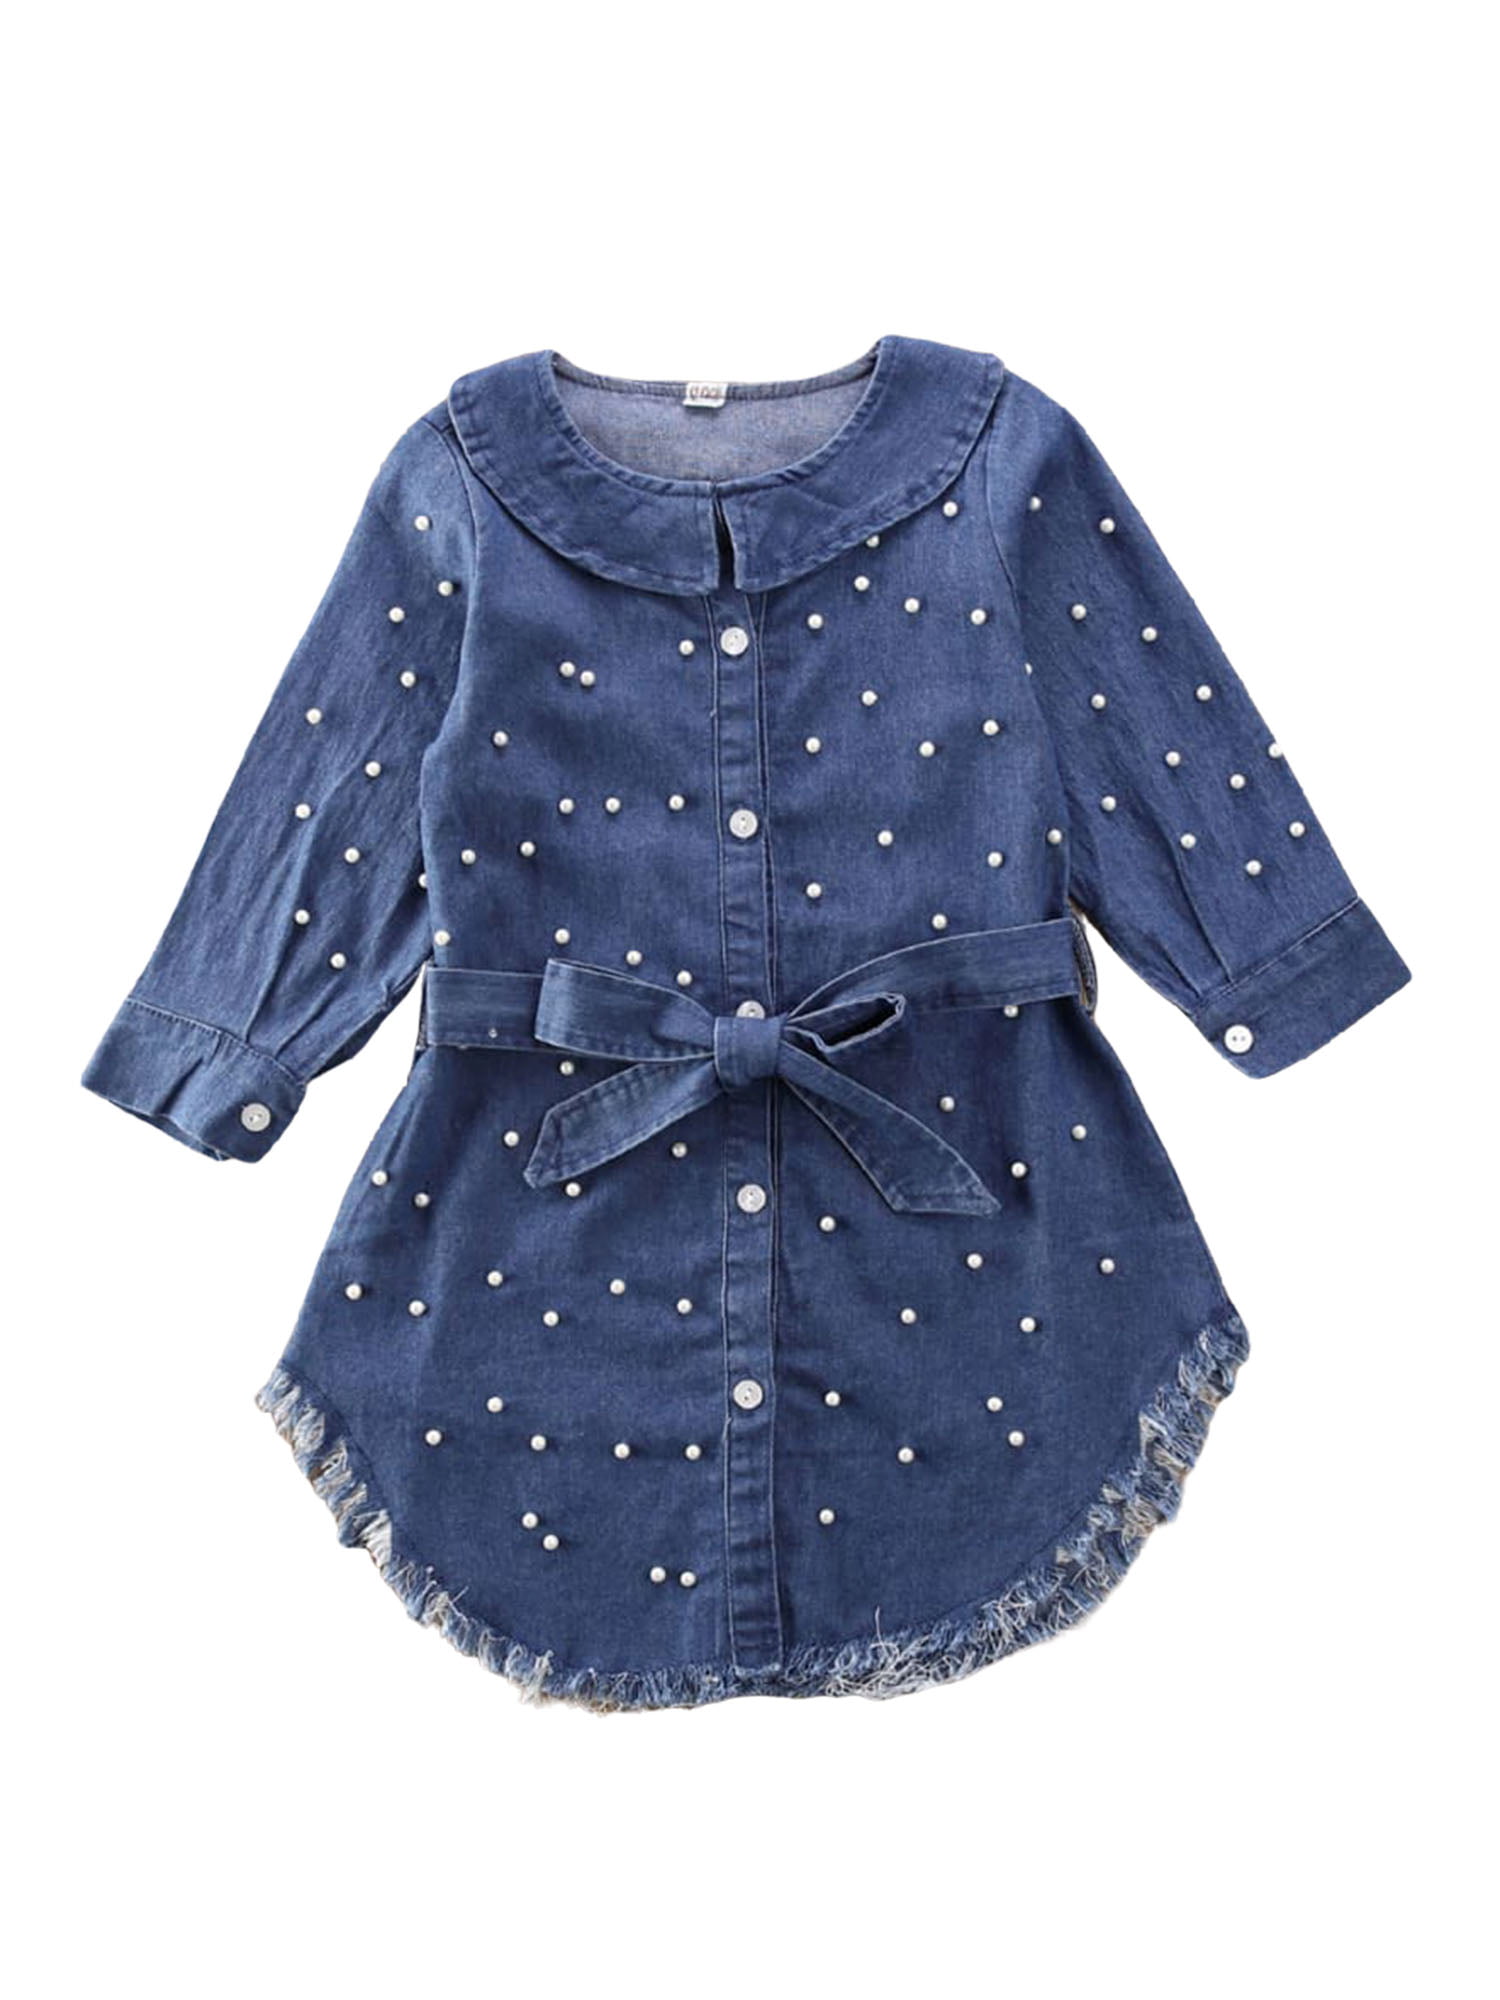 Seyurigaoka Girls  Organic Cotton Long-Sleeve Dresses Toddler Baby Girl Basic Plain Ruffle Shirt Tunic Dess 1 Piece Outfits